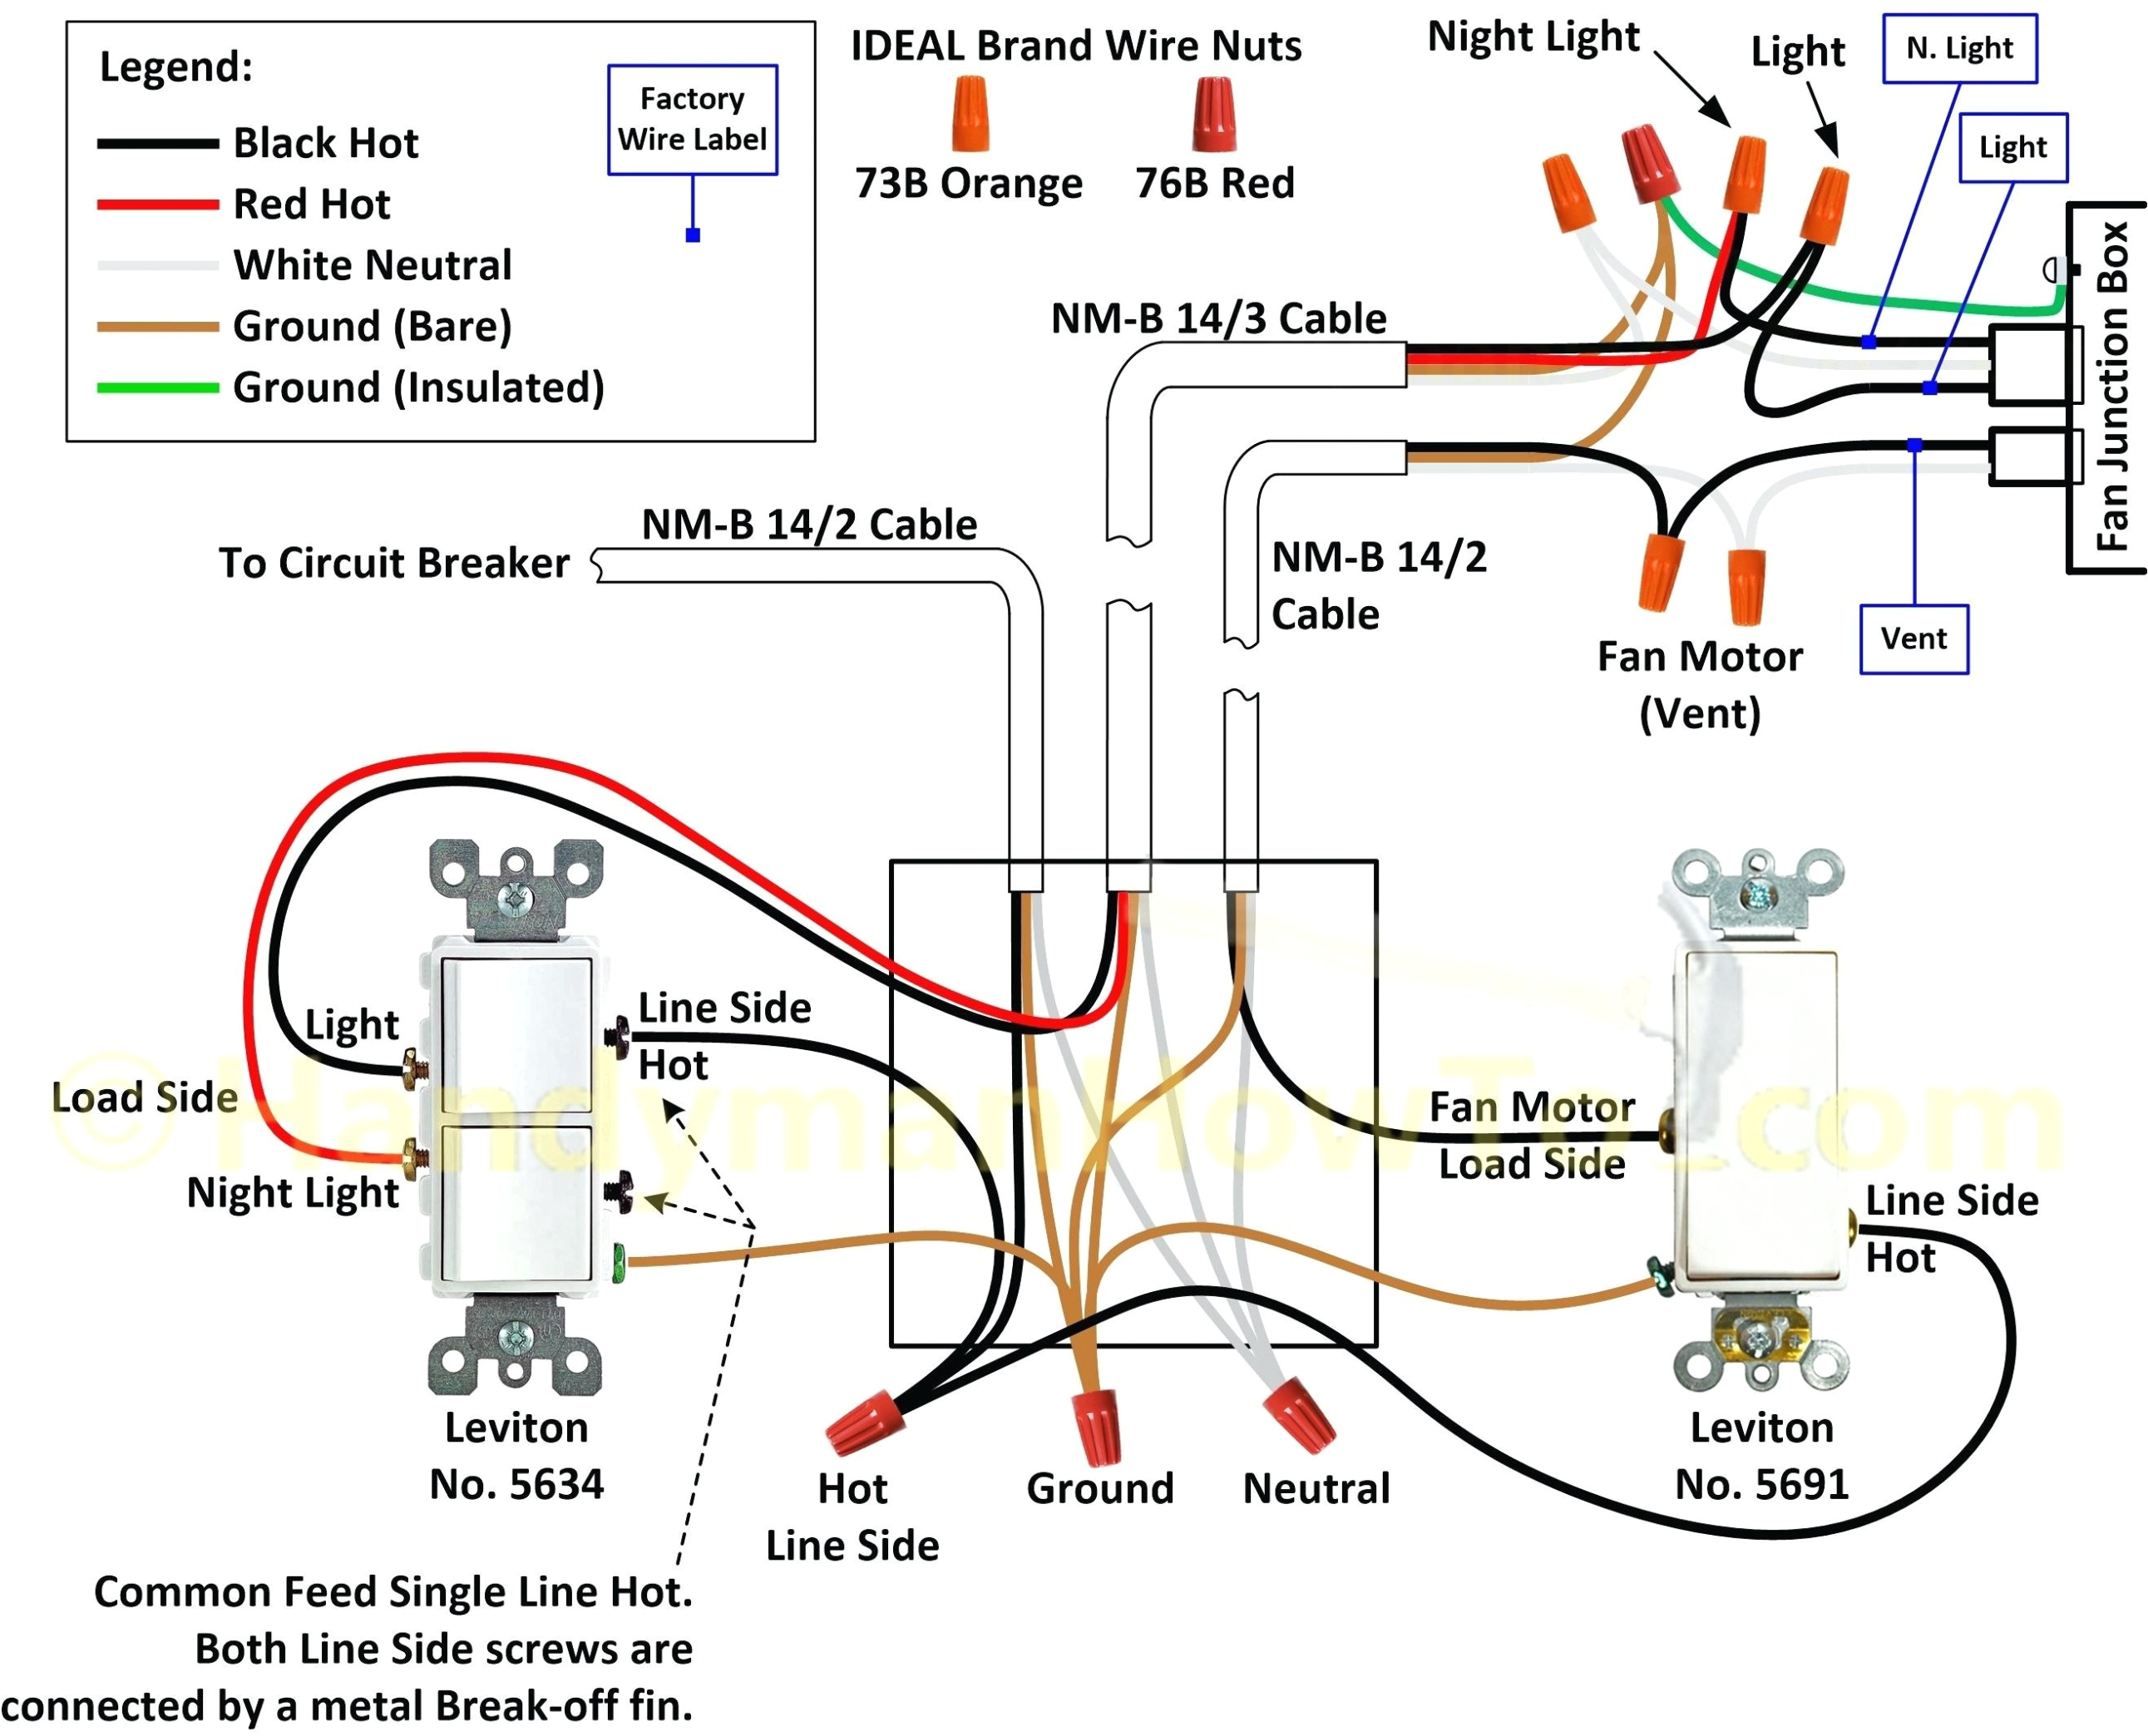 dimmer diagram wiring switch c9312hnonc wiring diagram operationsdimmer diagram wiring switch c9312hnonc wiring diagram local dimmer